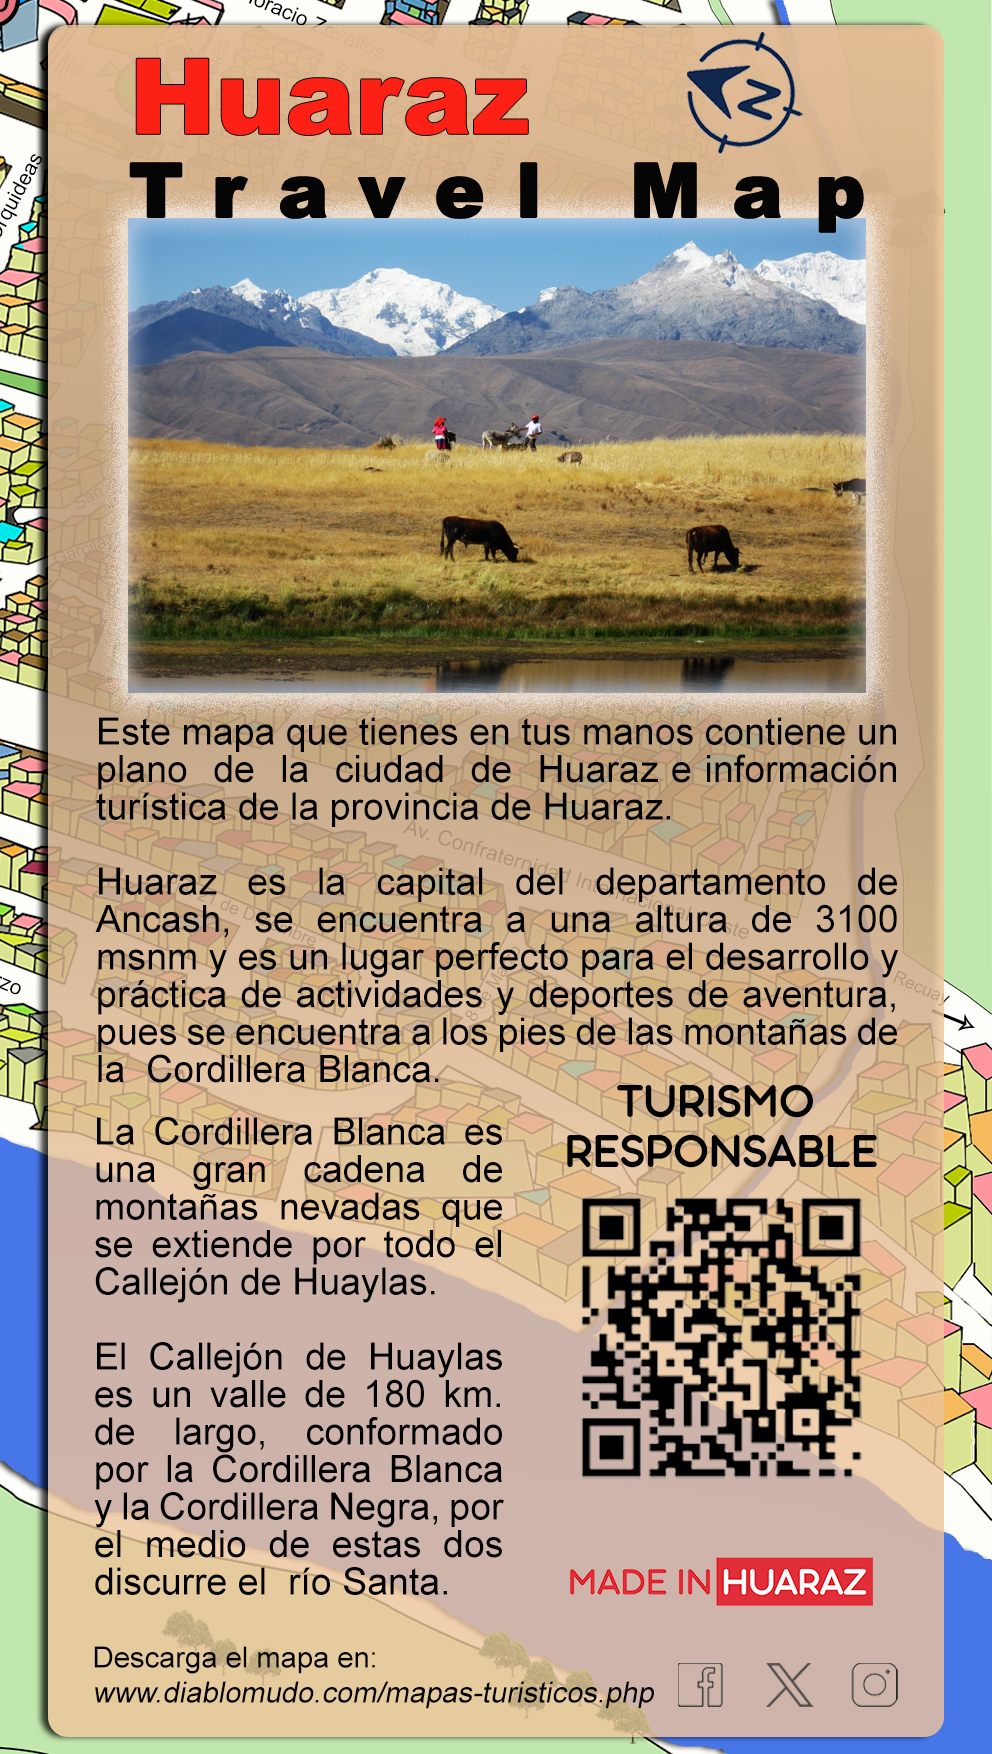 Huaraz Travel Map